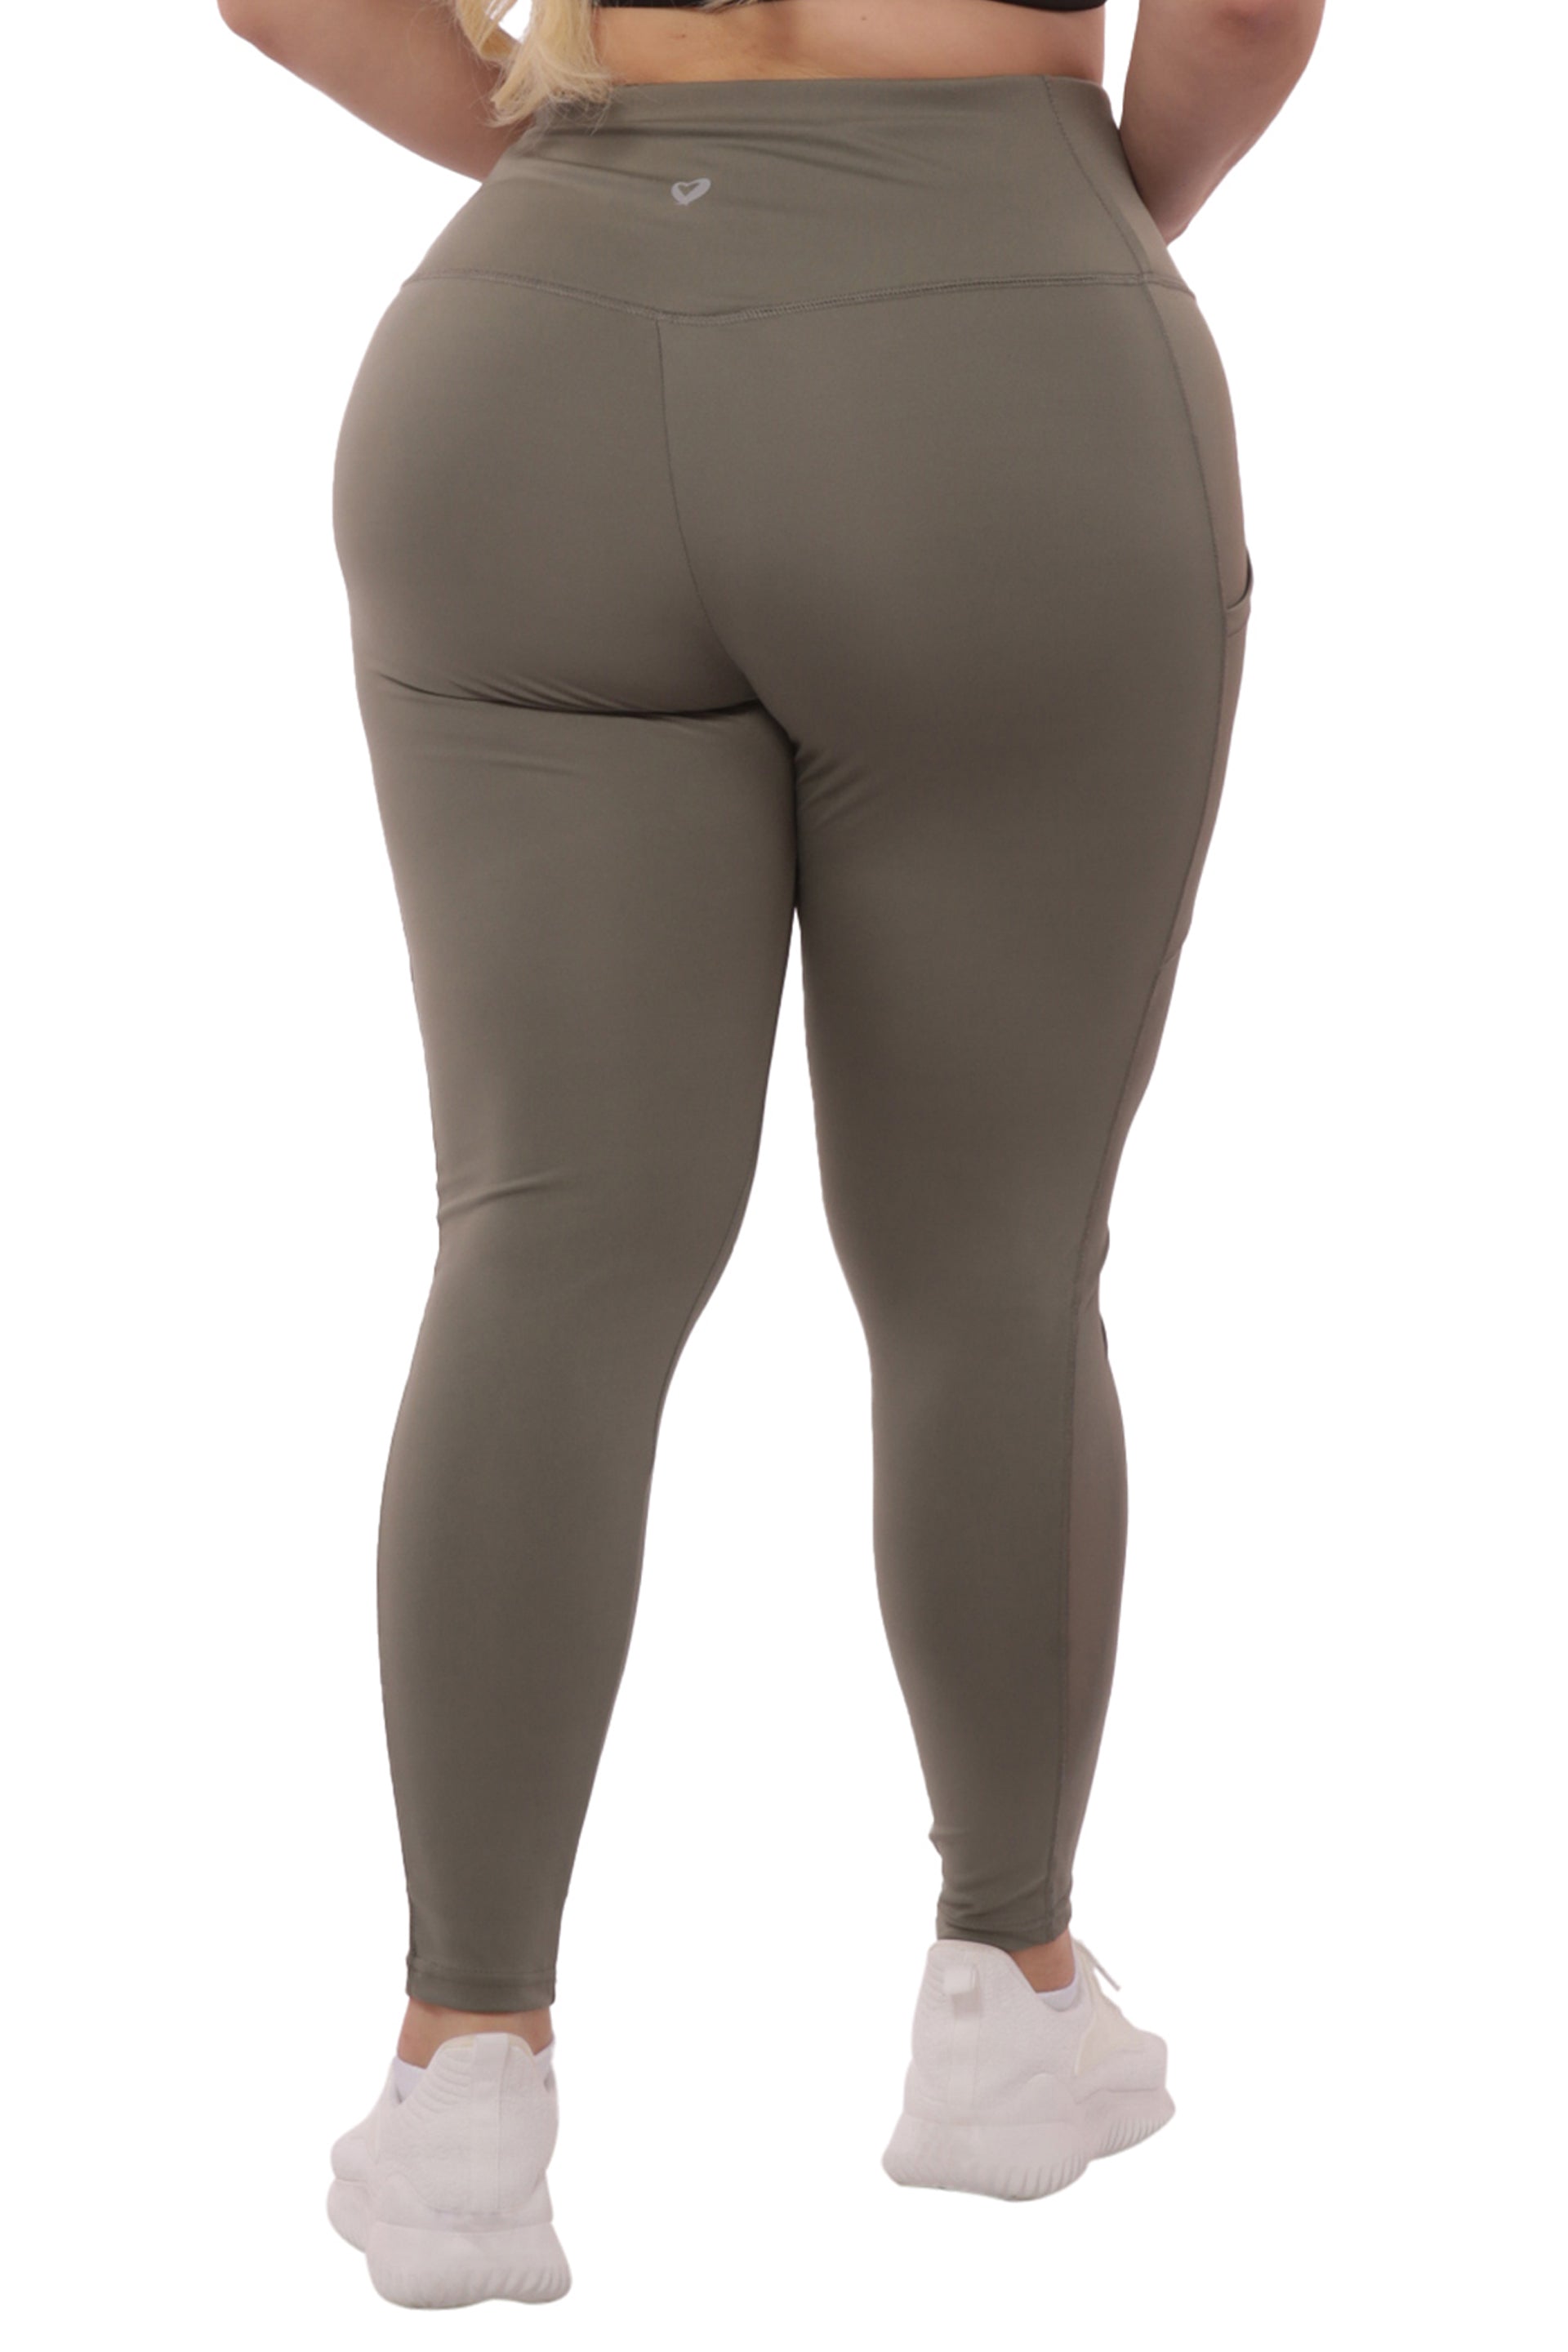 Wholesale Womens Plus Size High Waist Tummy Control Sports Leggings With Side Mesh Pocket Panels - Sage